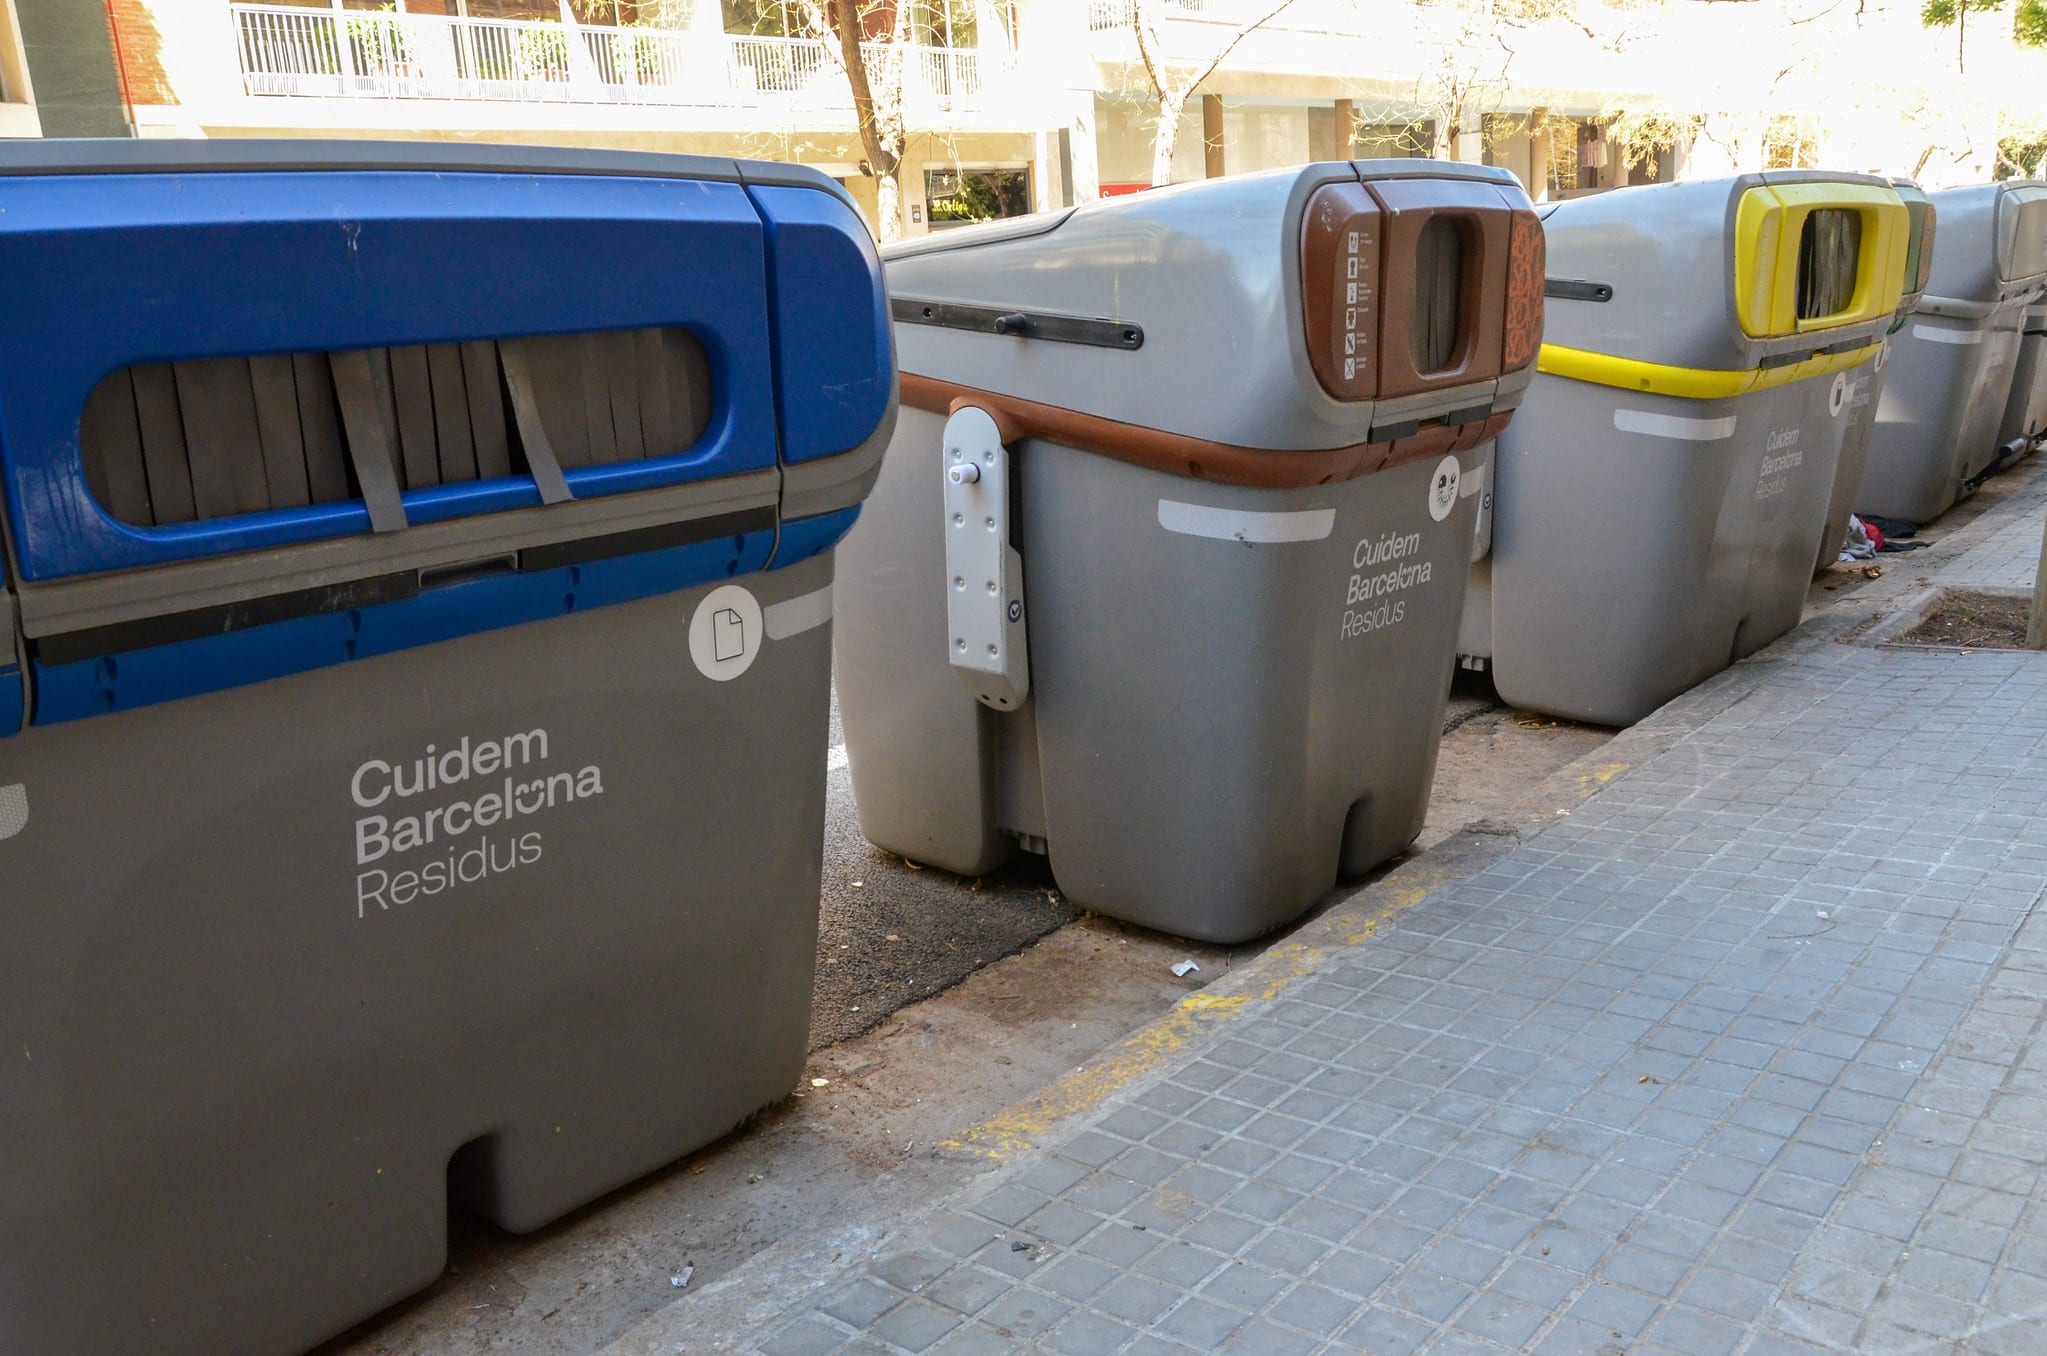 Recycling in Barcelona in easy